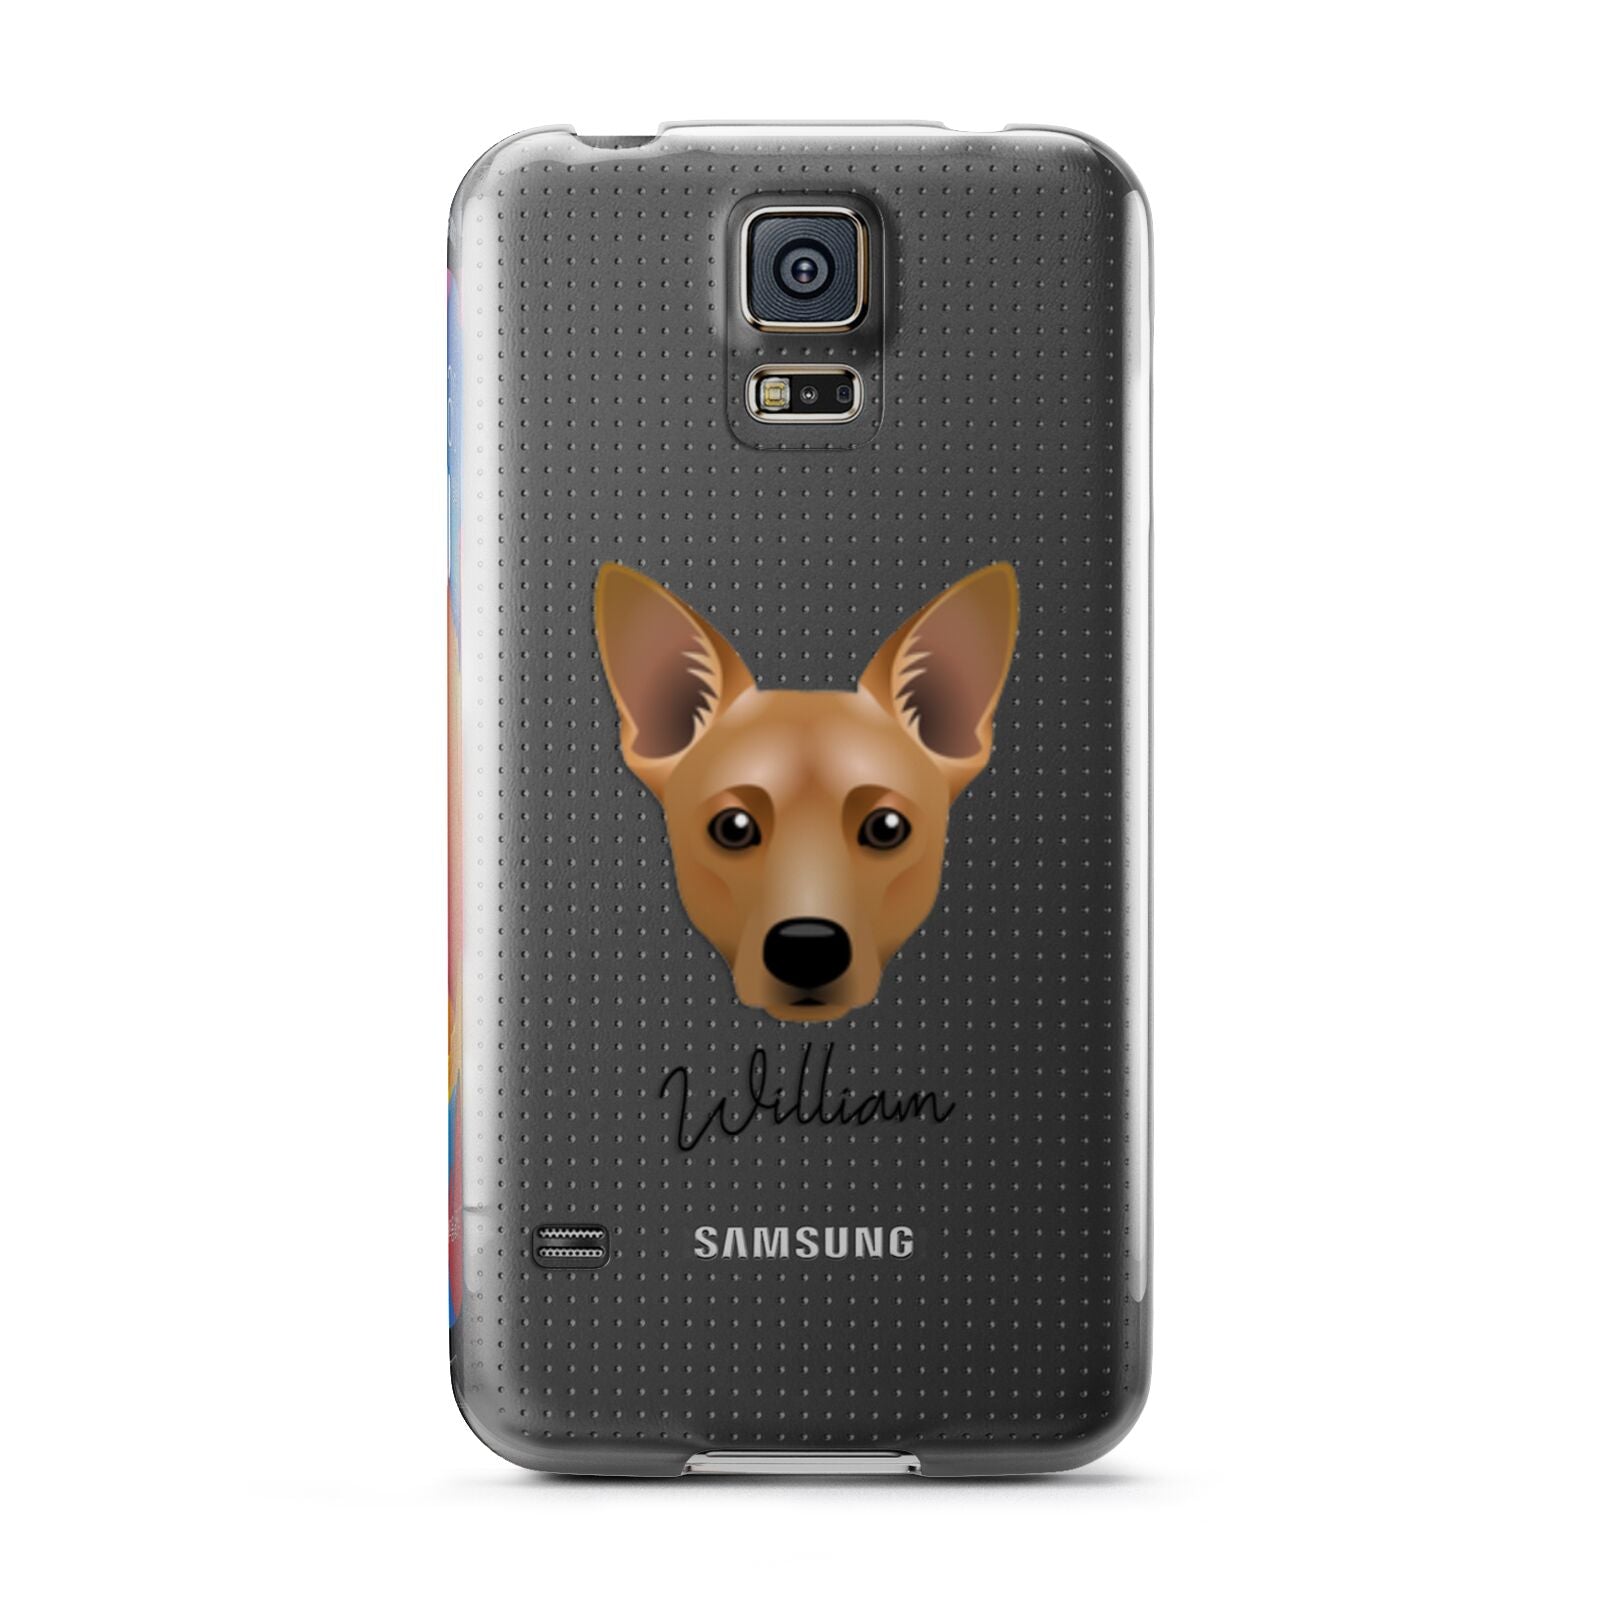 Cojack Personalised Samsung Galaxy S5 Case